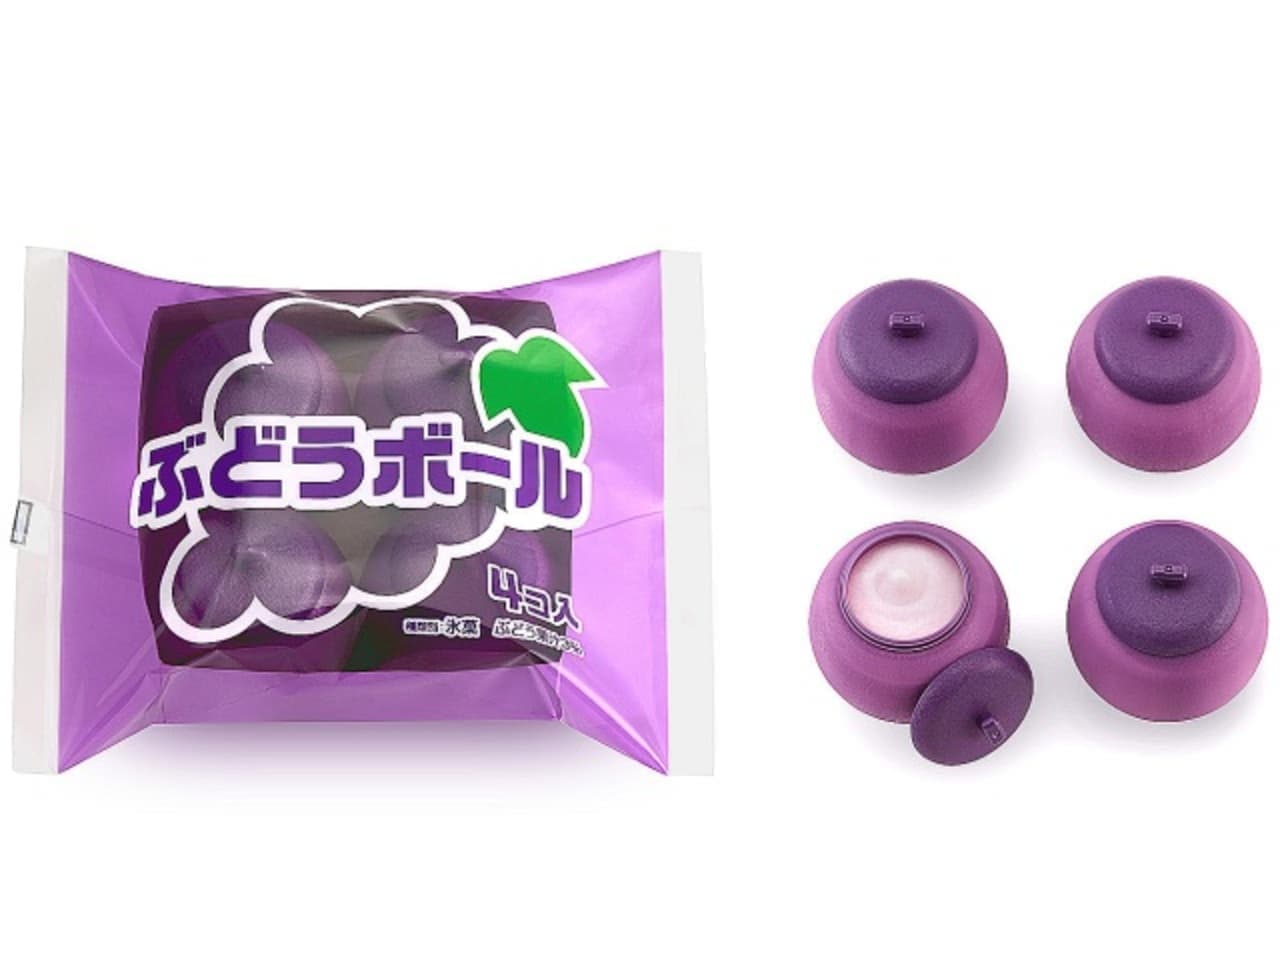 7-ELEVEN "Imuraya Grape Ball Multi